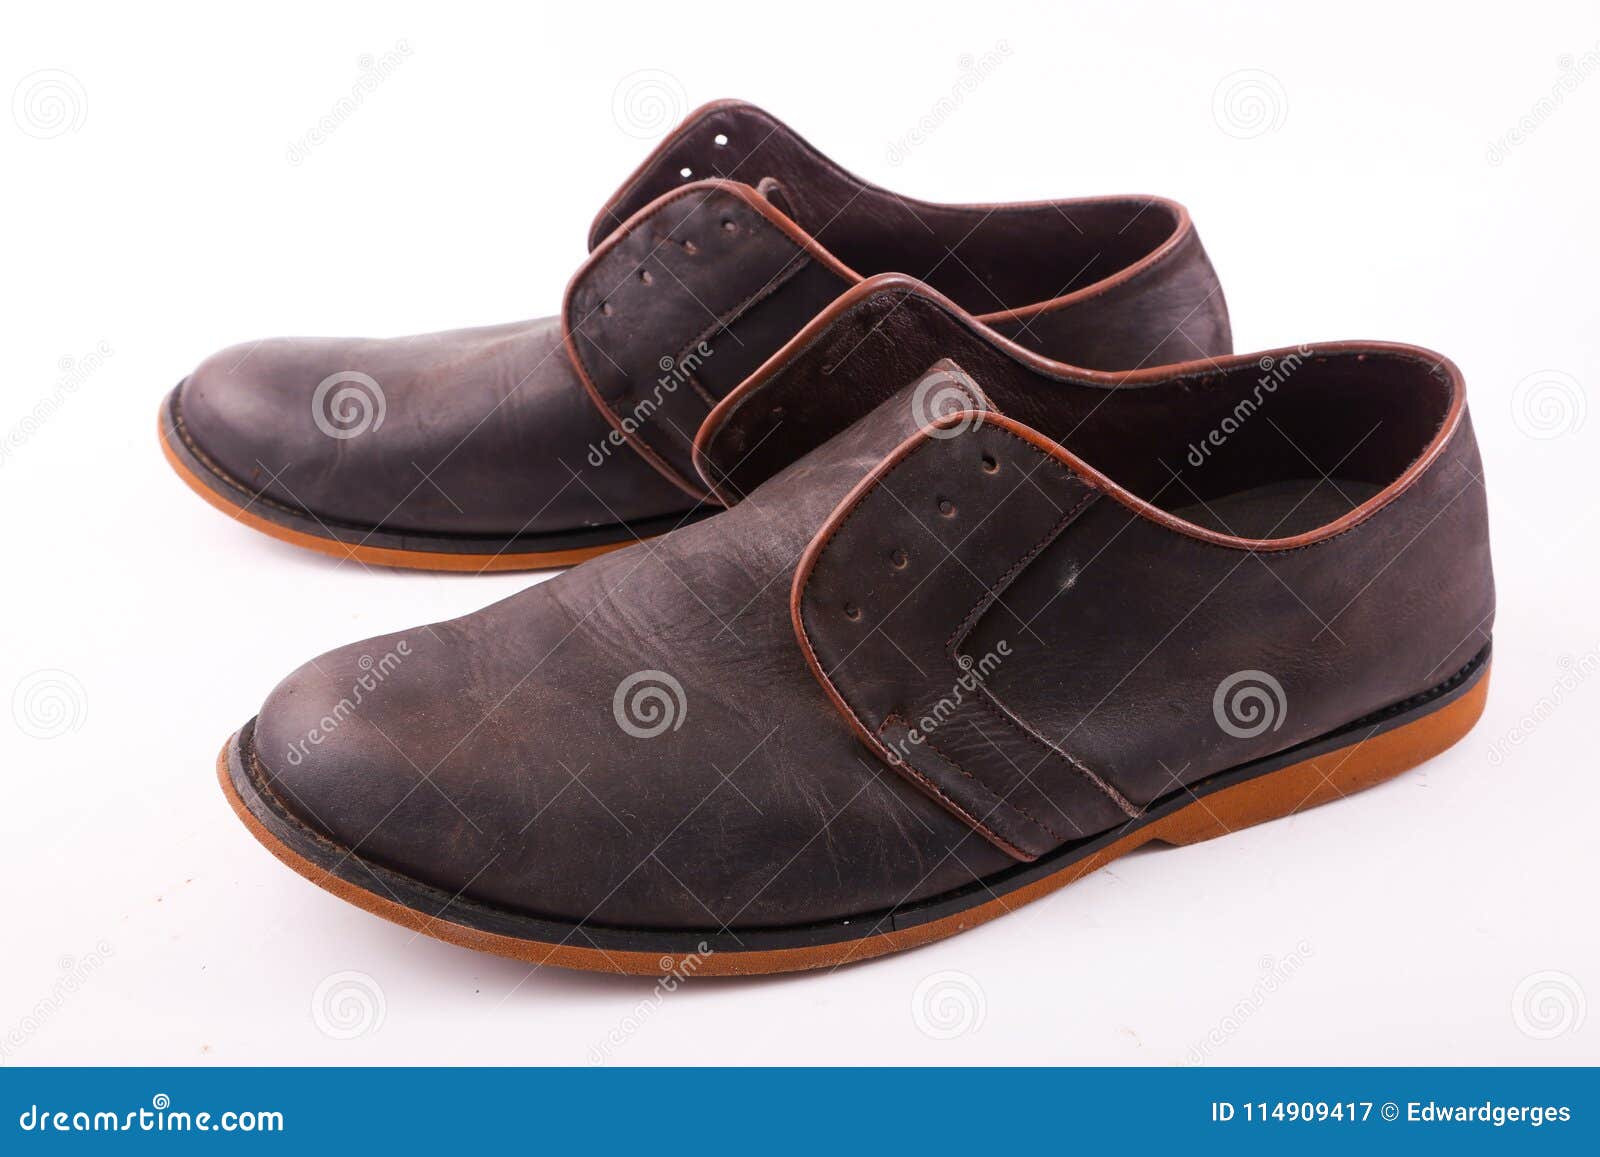 Black Shoe close up stock image. Image of design, black - 114909417